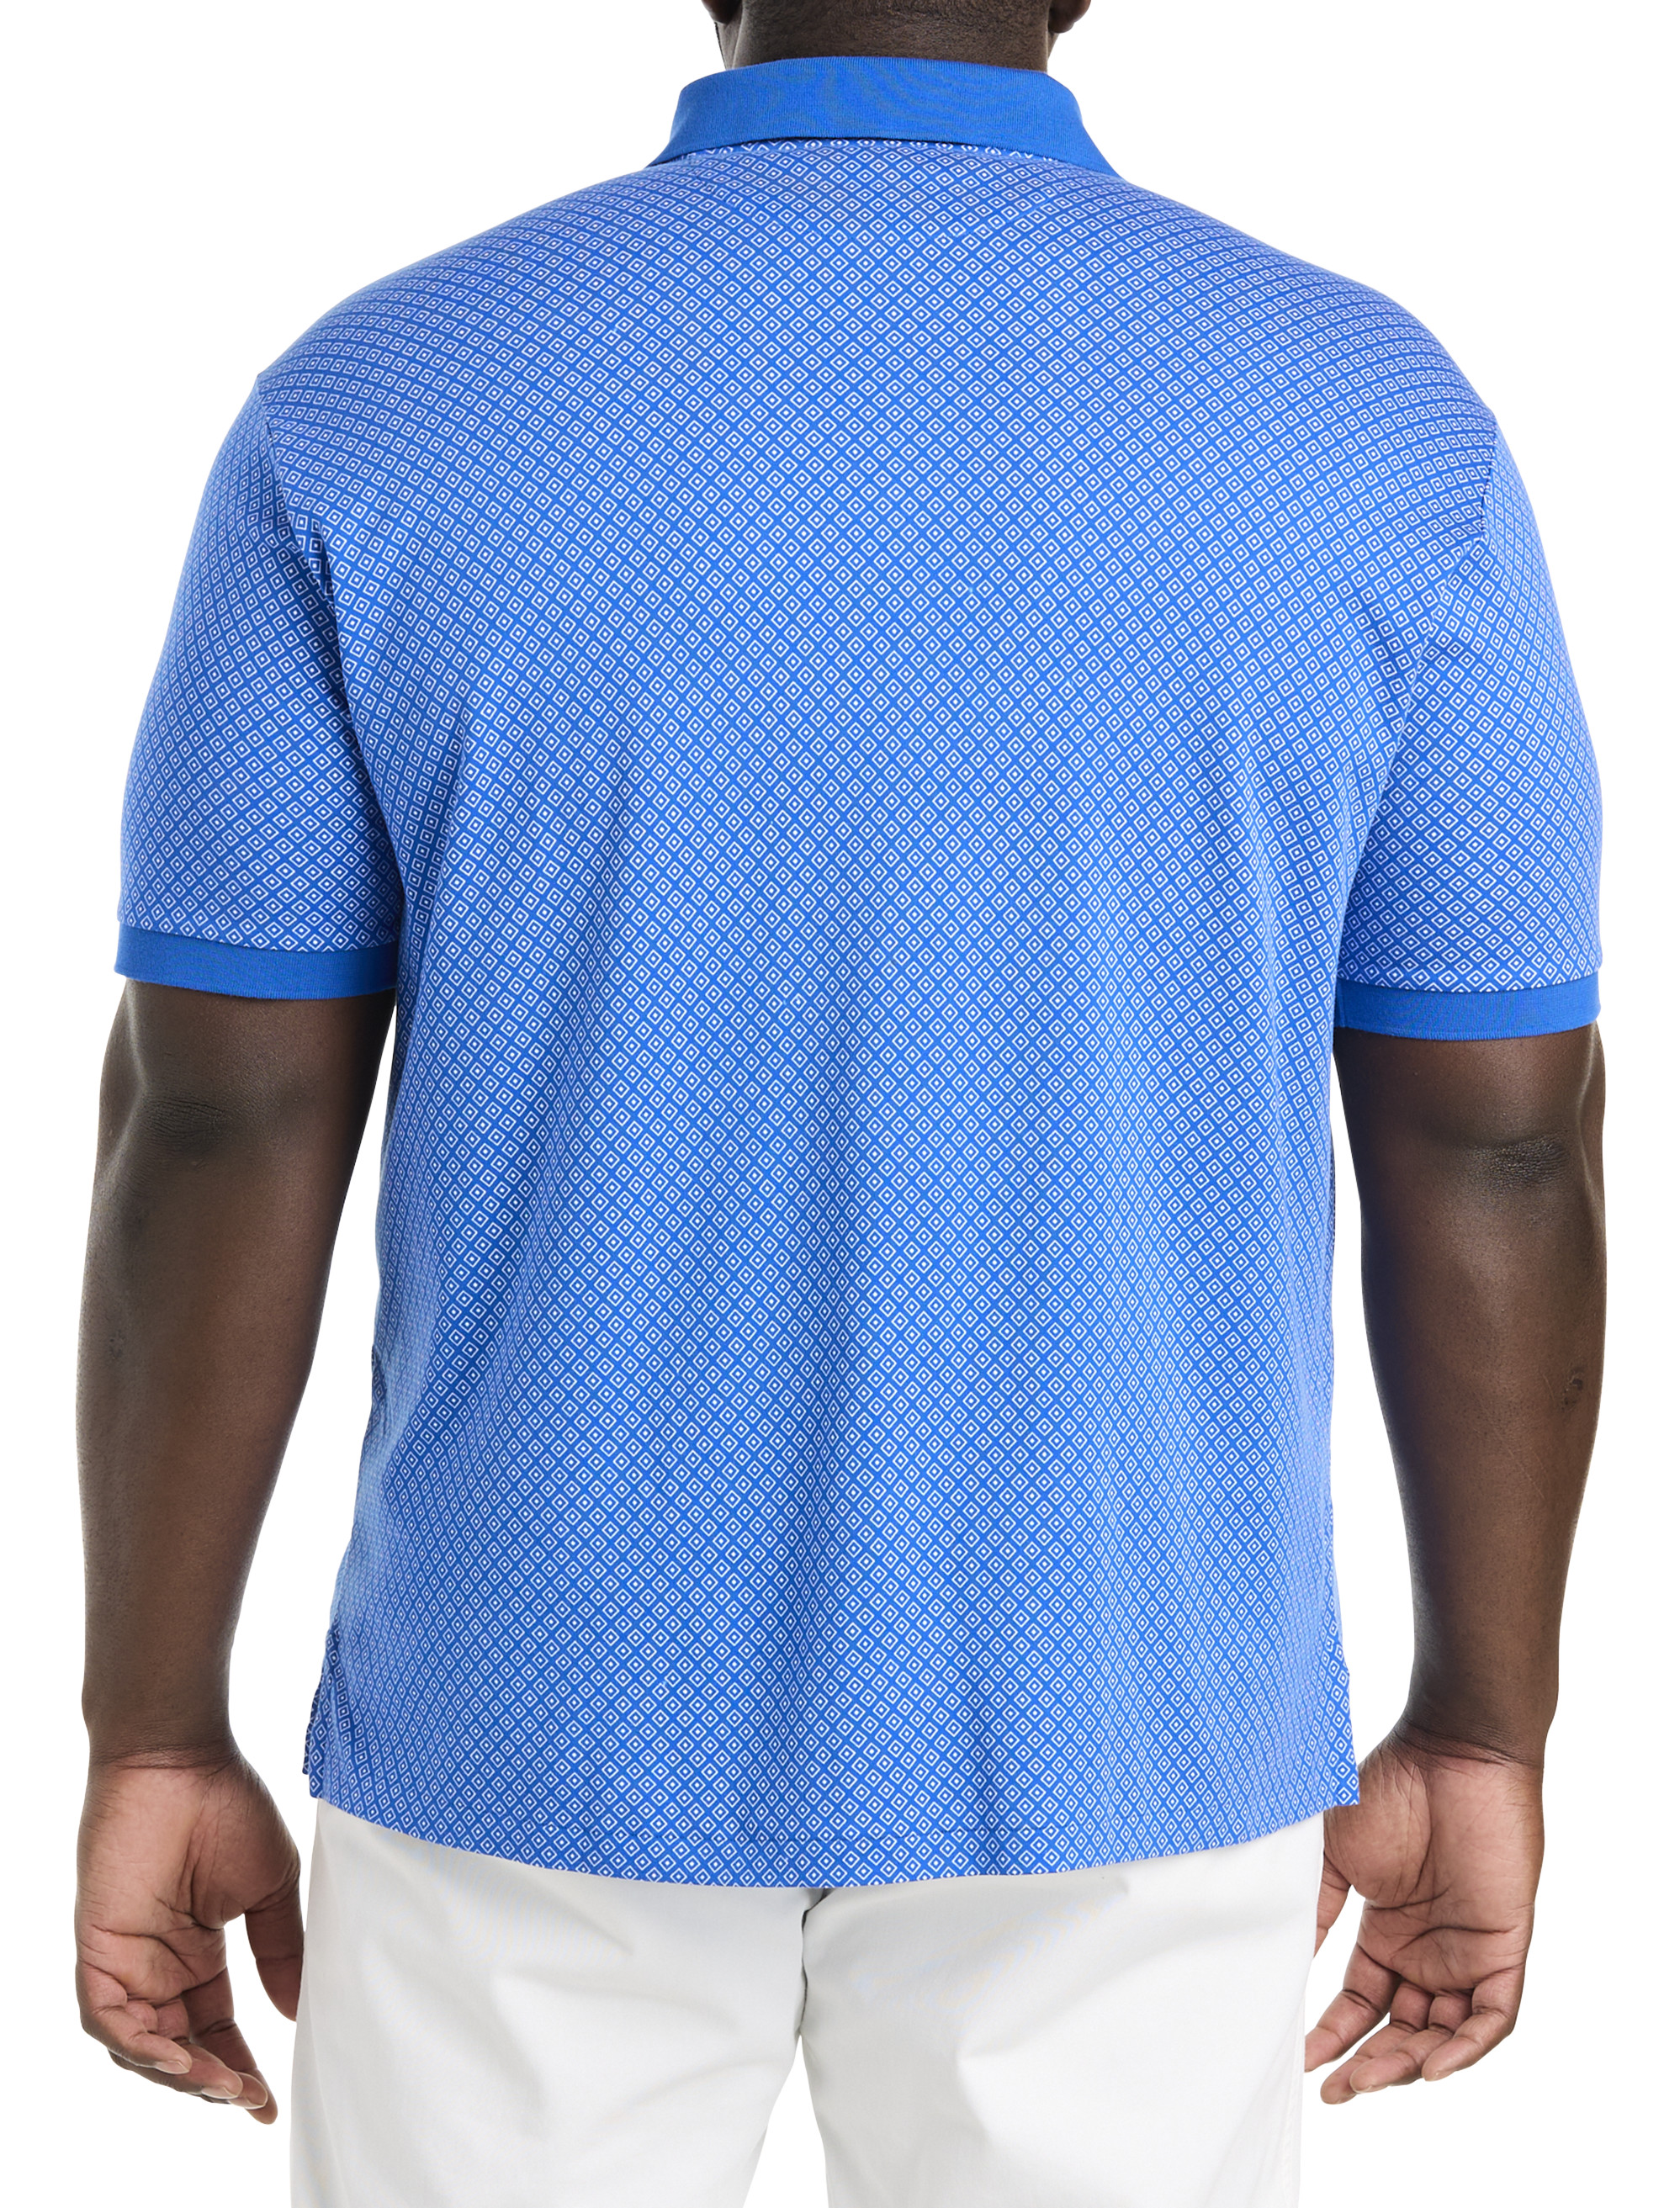 Vintage Chaps Ralph Lauren Shirt Mens XL Blue Striped Long Sleeve Polo  Casual